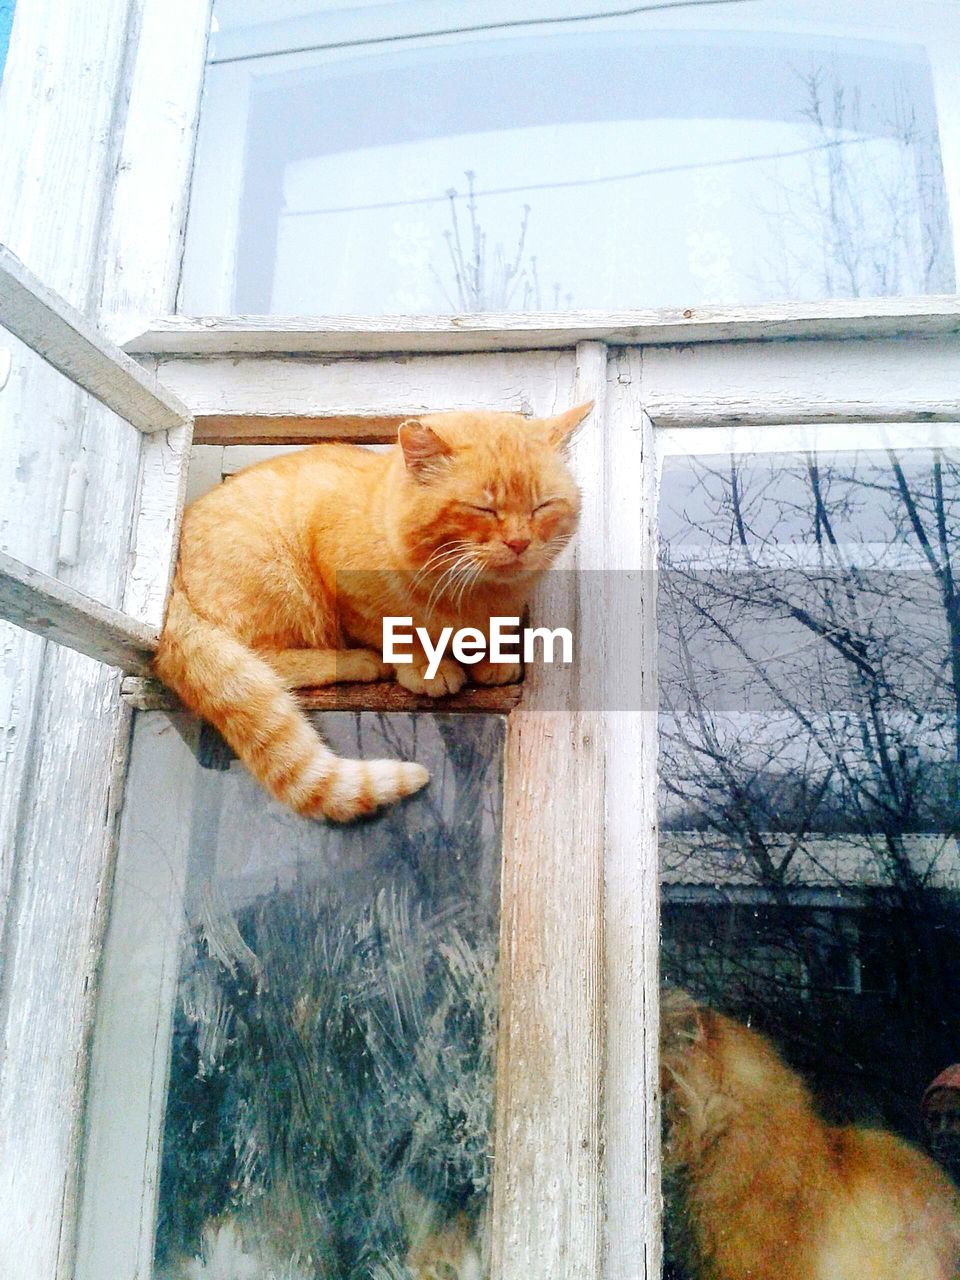 Cat stuck in glass window